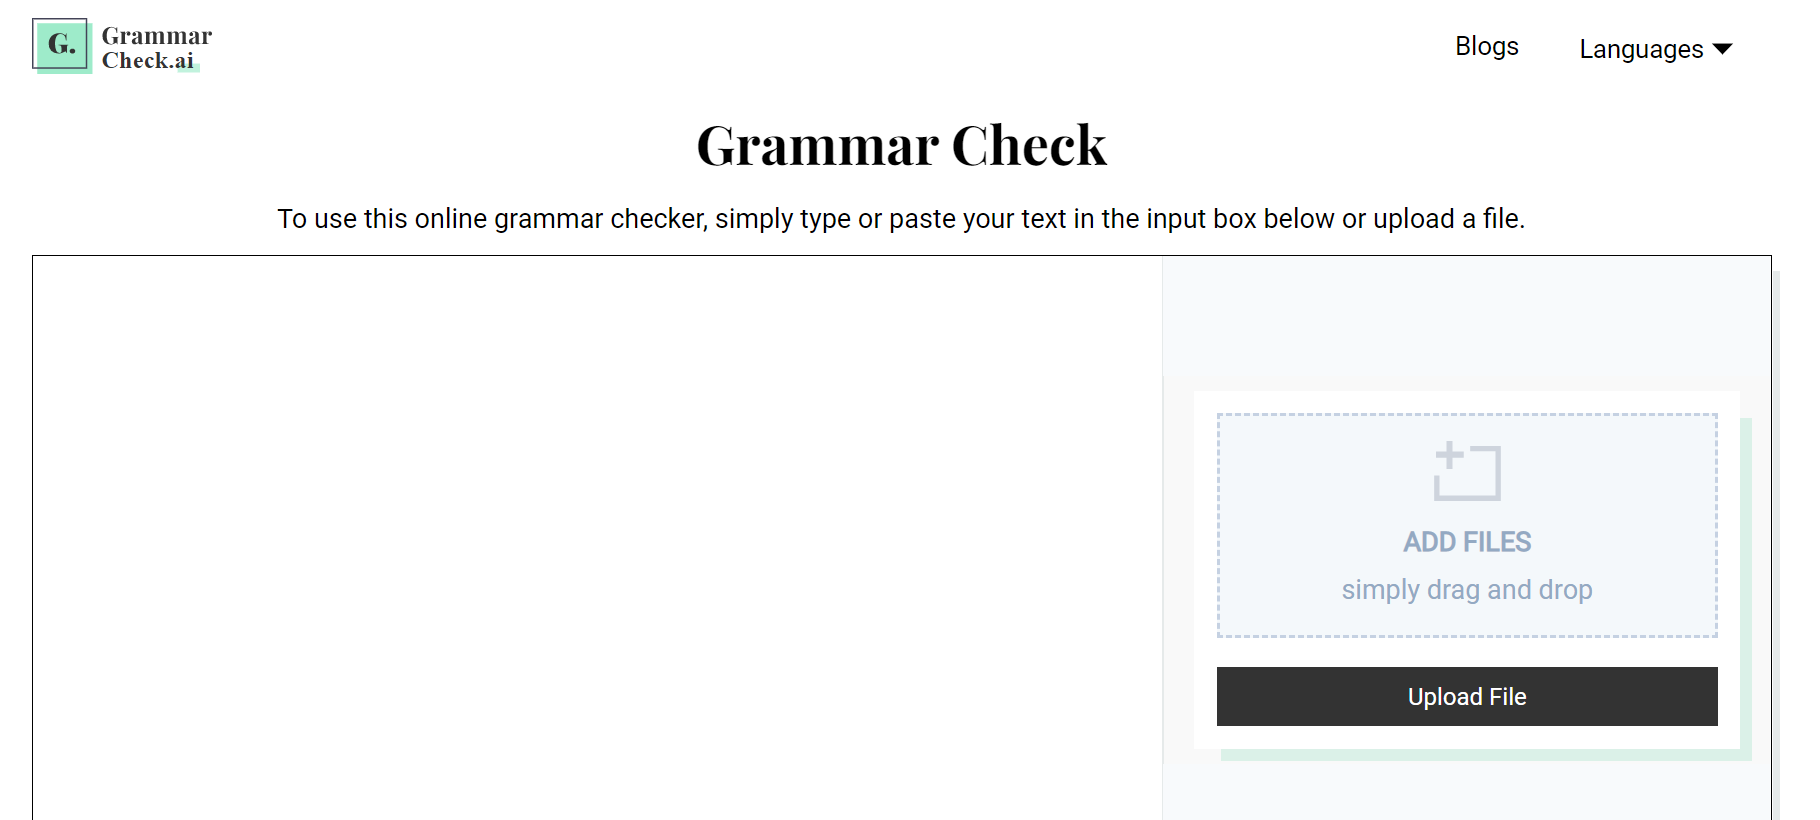 Grammar Check tool